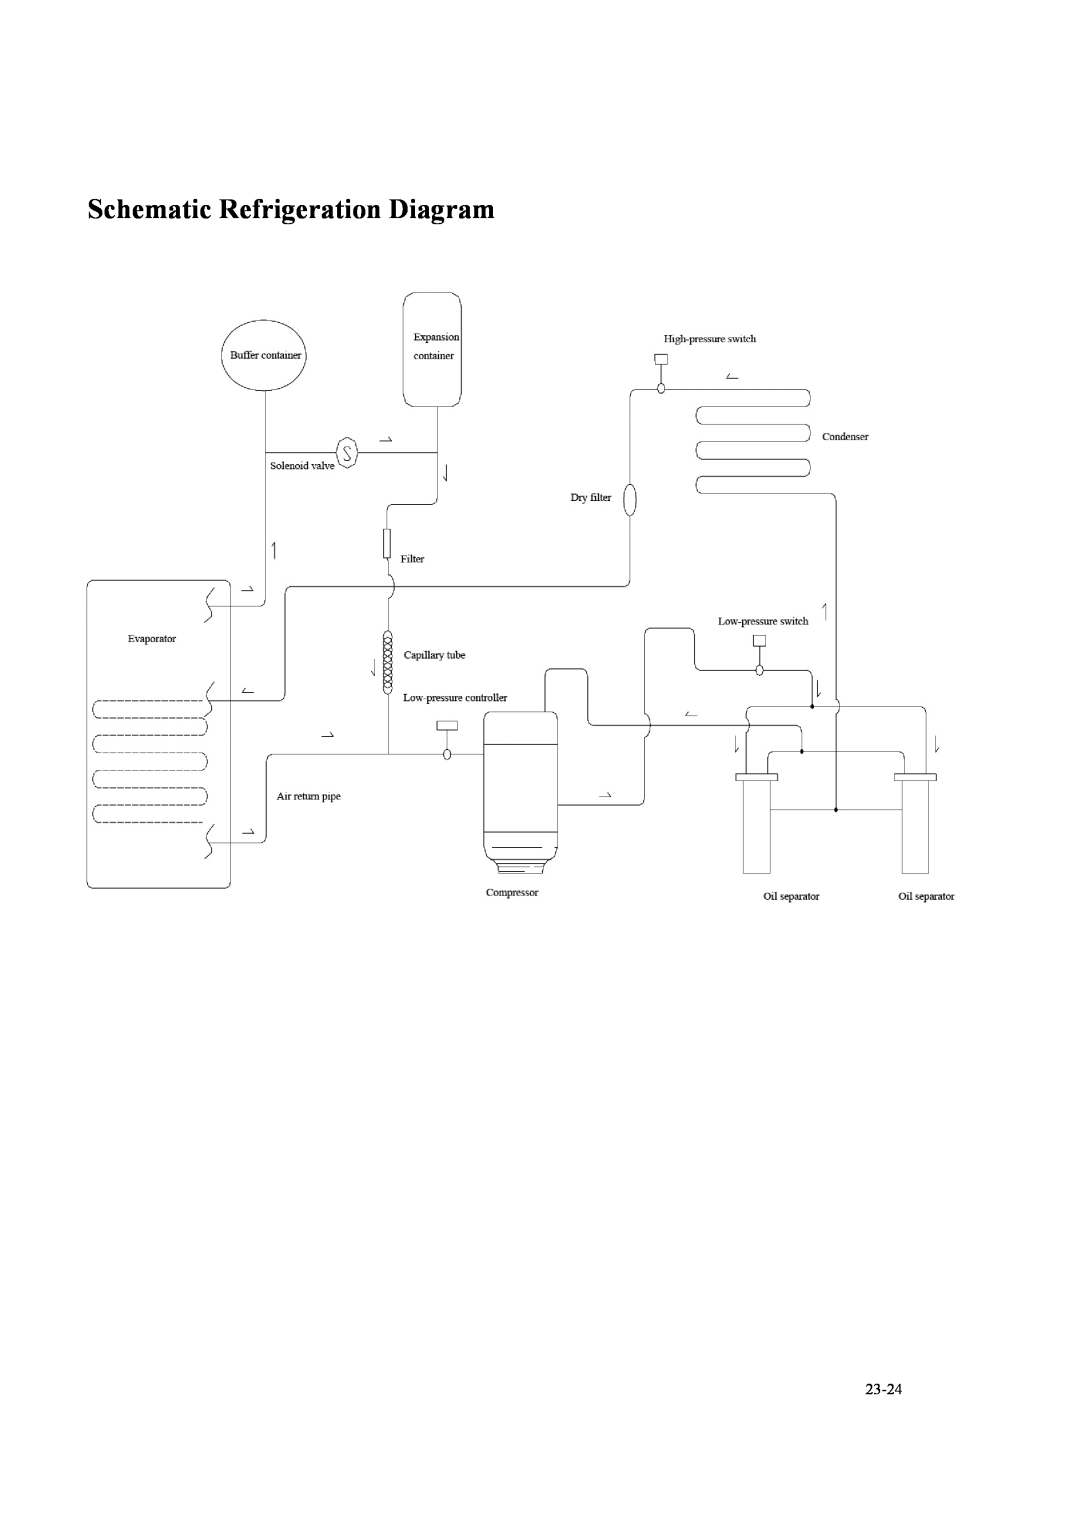 Haier DW-150W200 operation manual Schematic Refrigeration Diagram, 23-24 